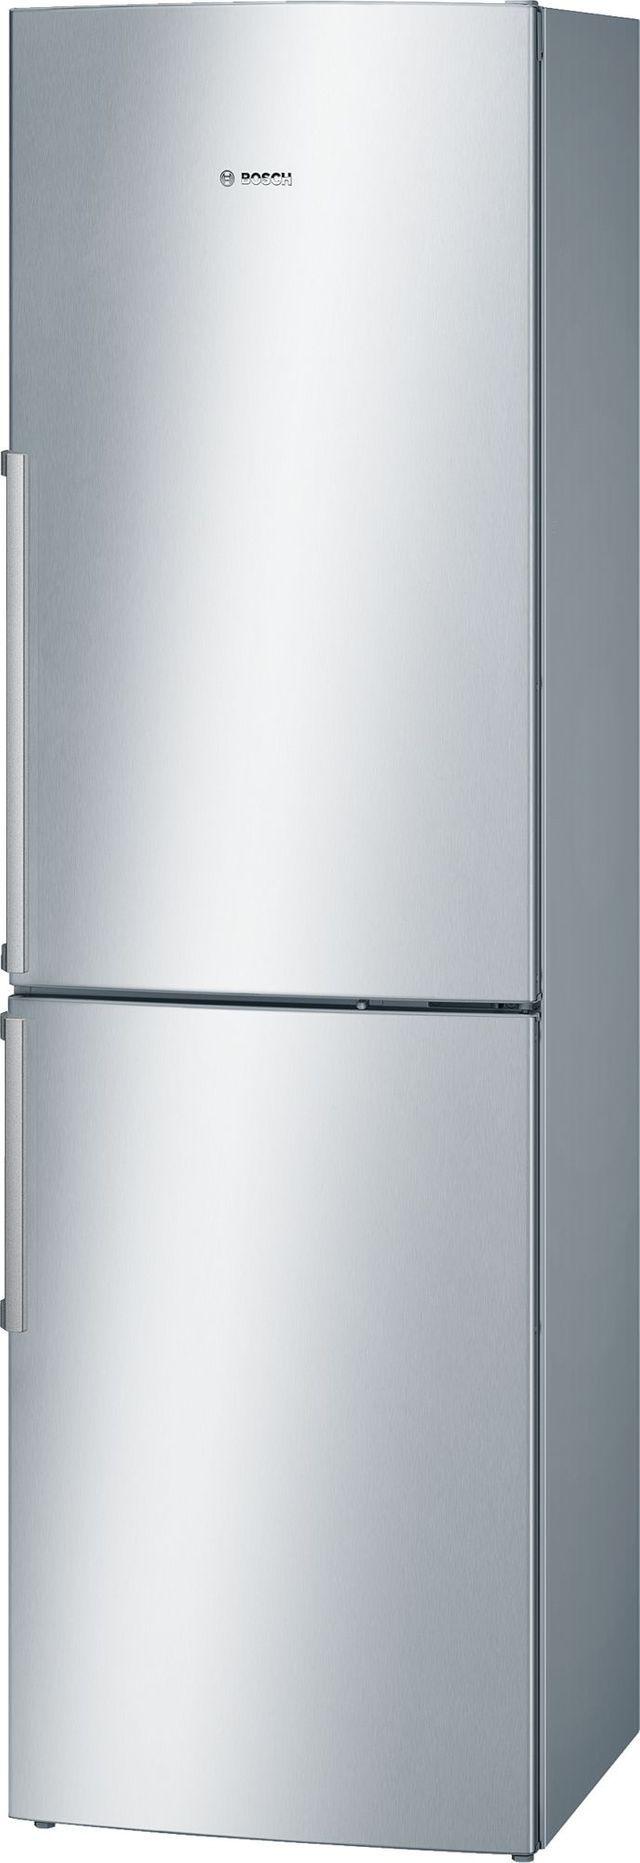 Bosch 800 Series 11.0 Cu. Ft. Stainless Steel Counter-Depth Bottom Freezer Refrigerator-3